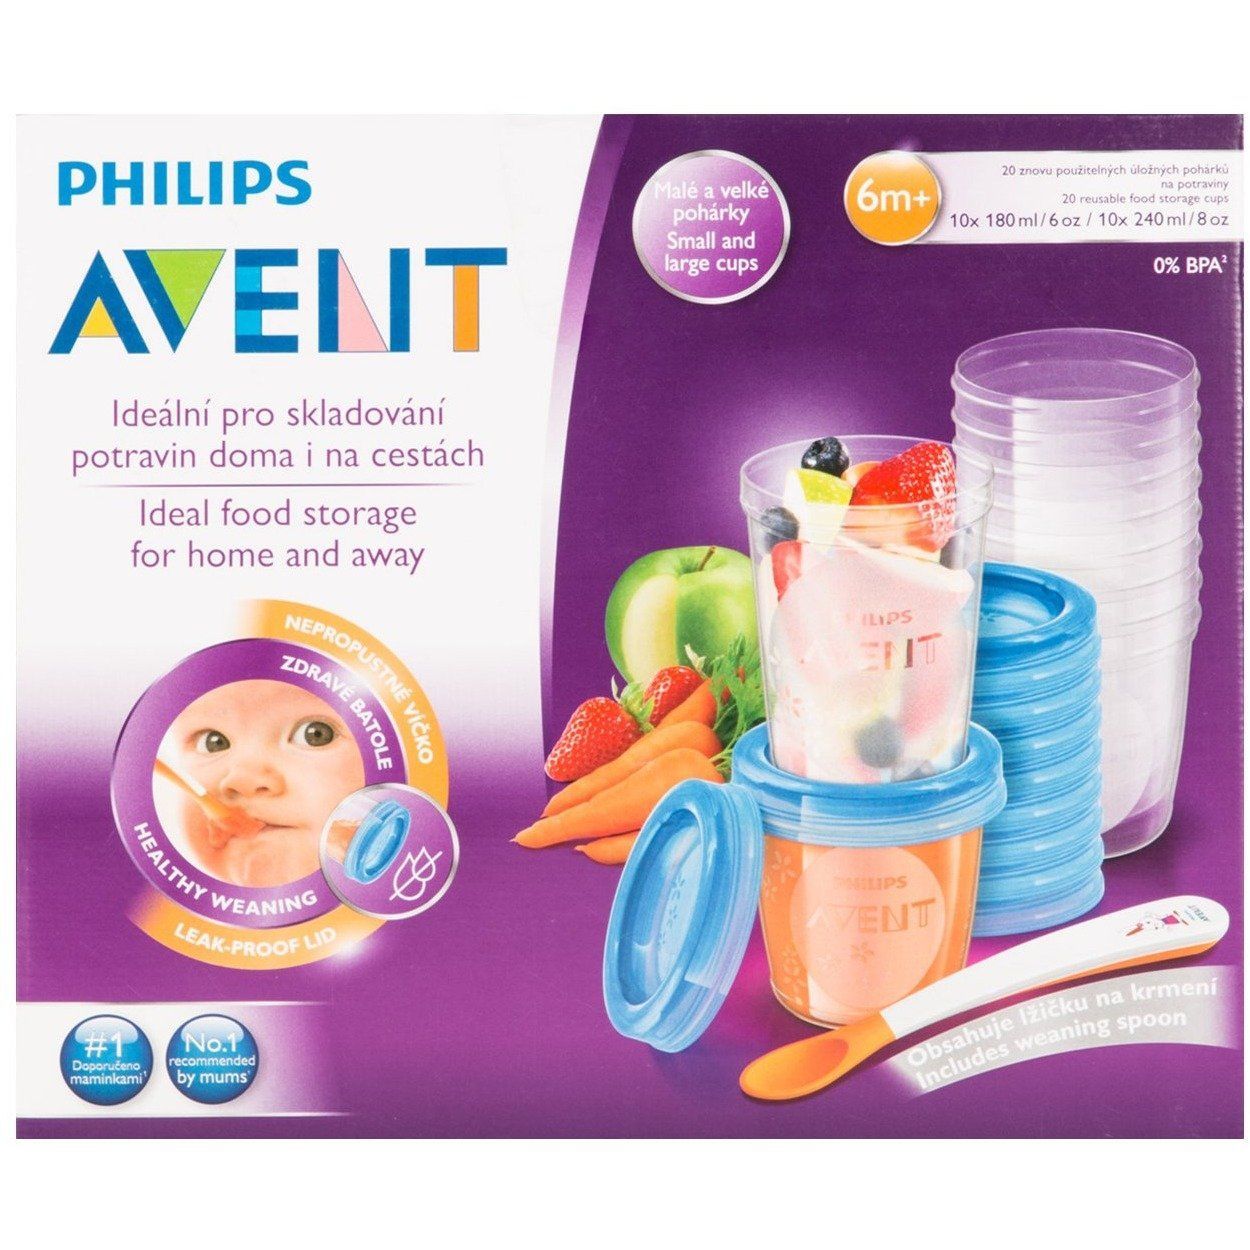 Philips Avent Kit VIA Armagenagem de Comida/Leite Bestseller Anne Claire Baby Store 